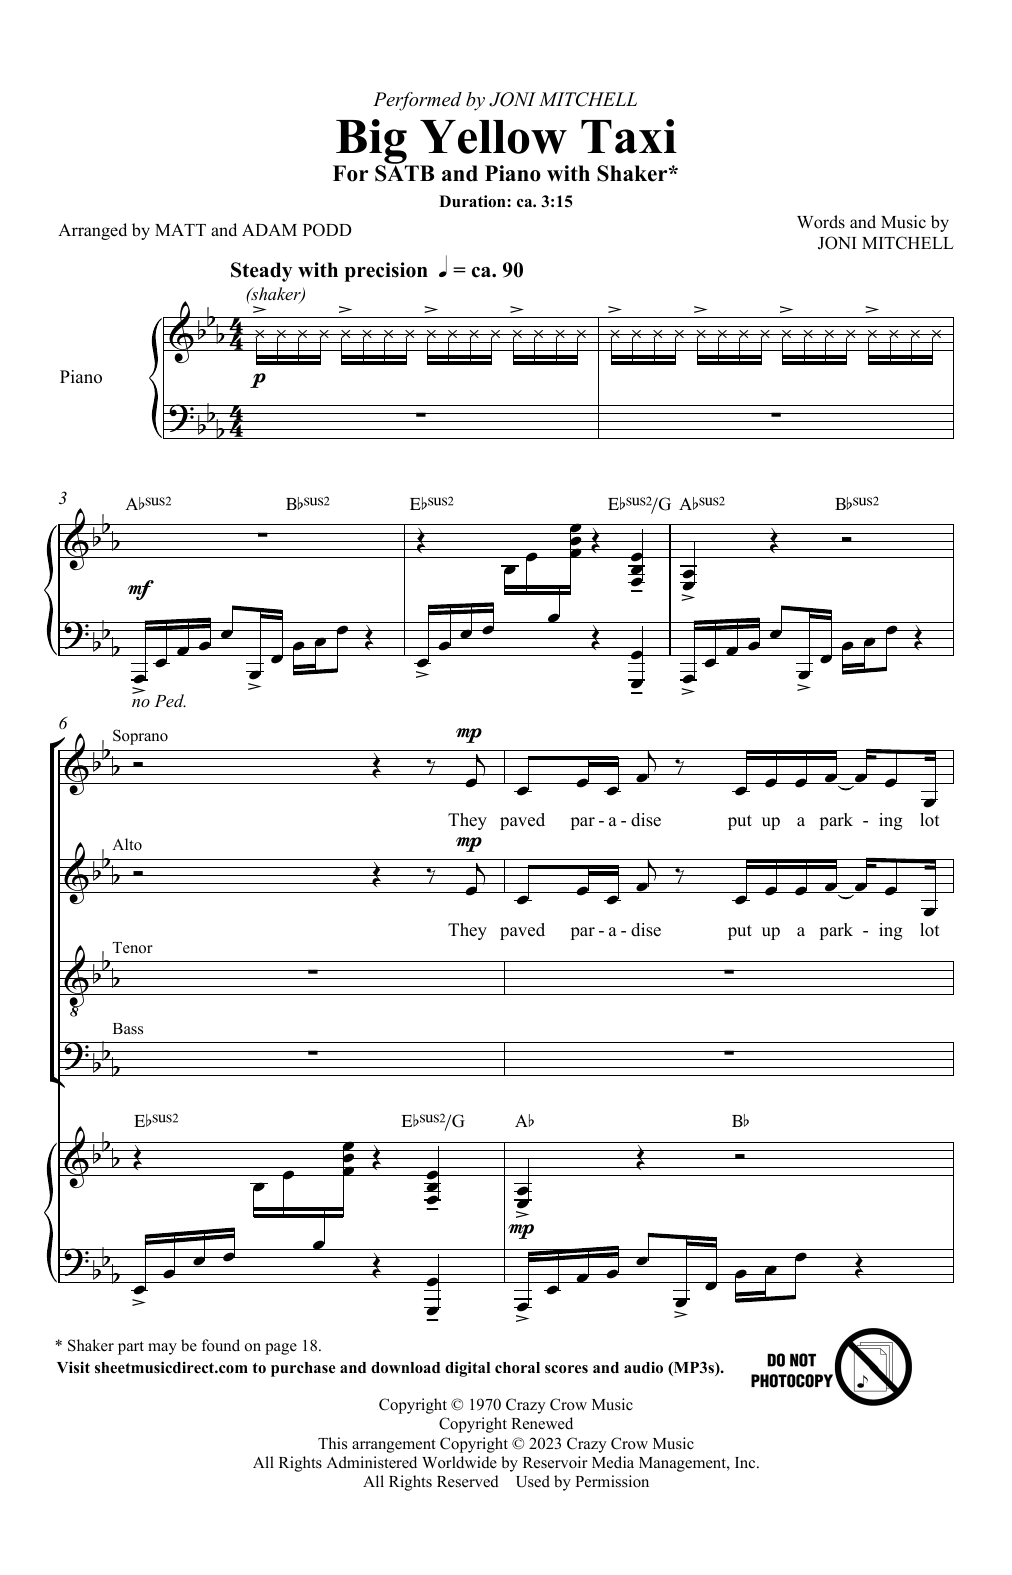 Joni Mitchell Big Yellow Taxi (arr. Adam and Matt Podd) sheet music notes and chords arranged for SATB Choir